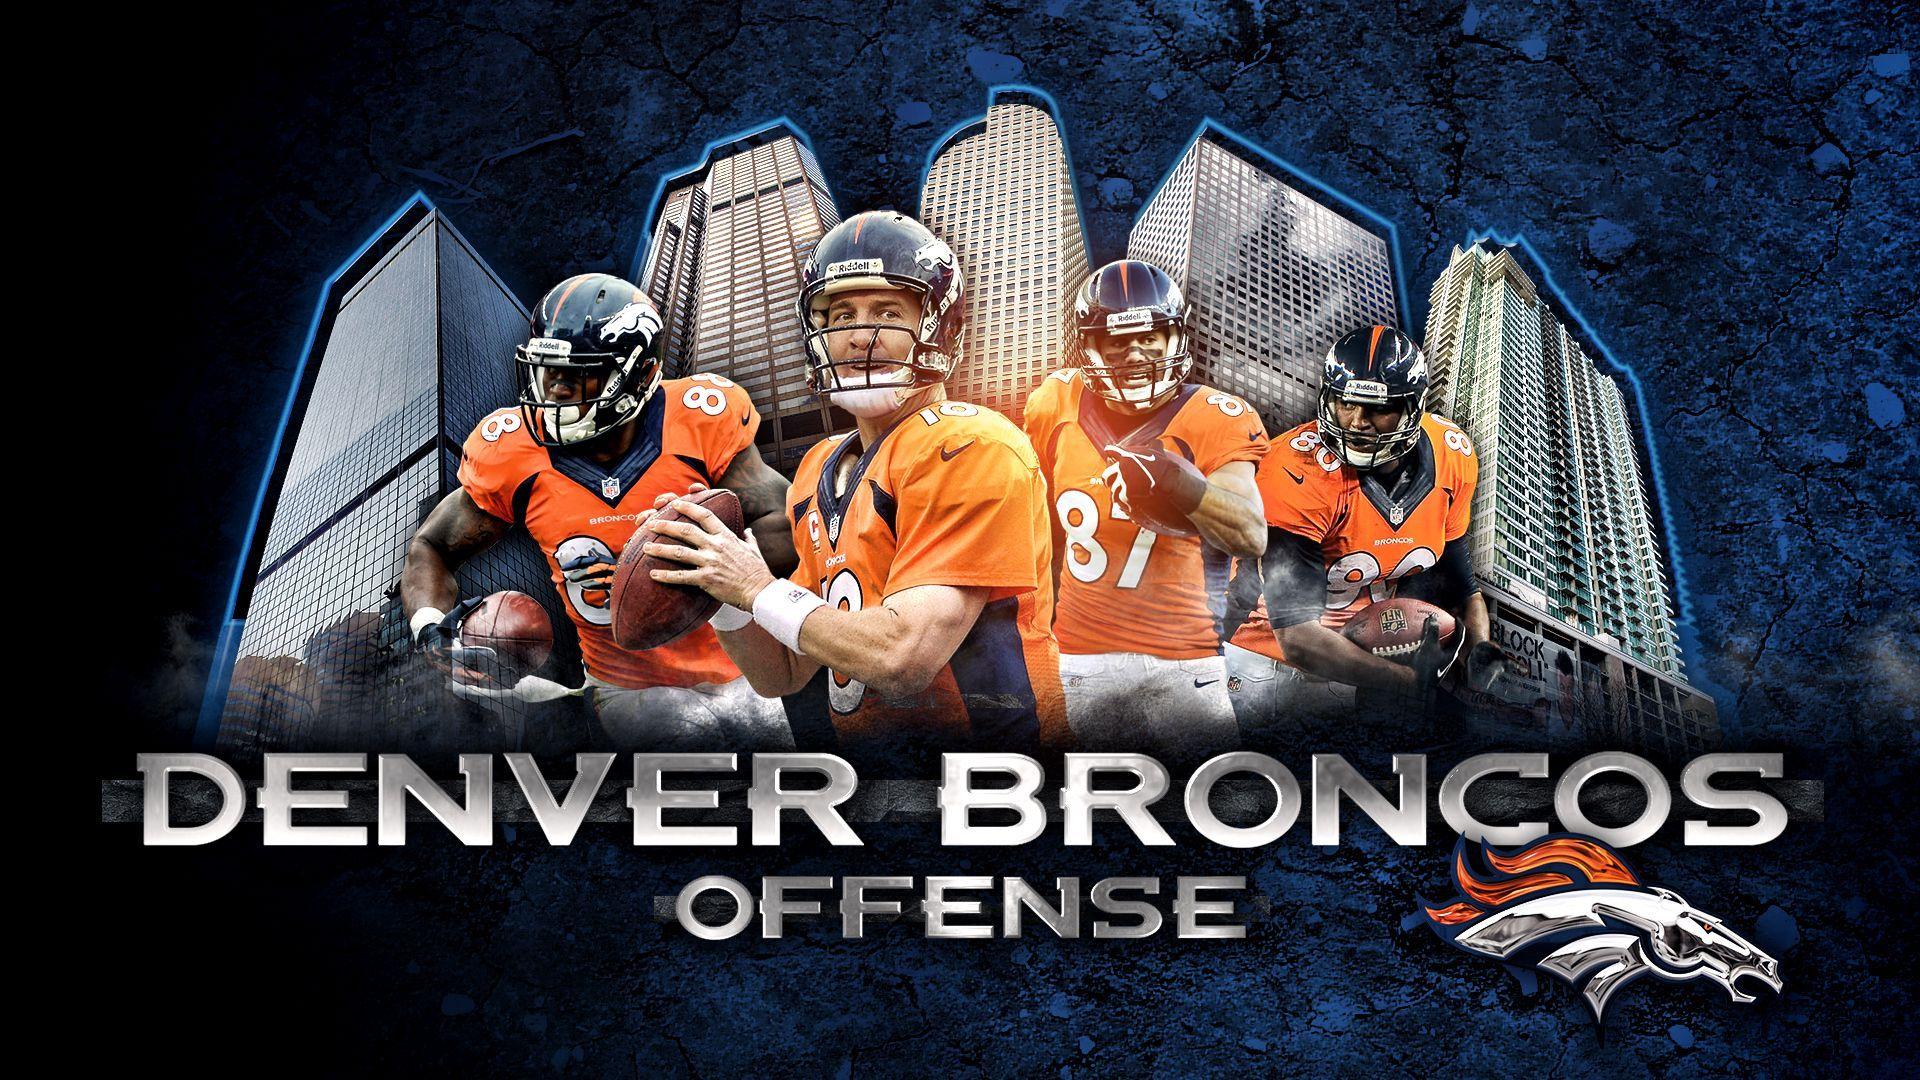 denver broncos schedule wallpaper. Denver Broncos Defensive Line